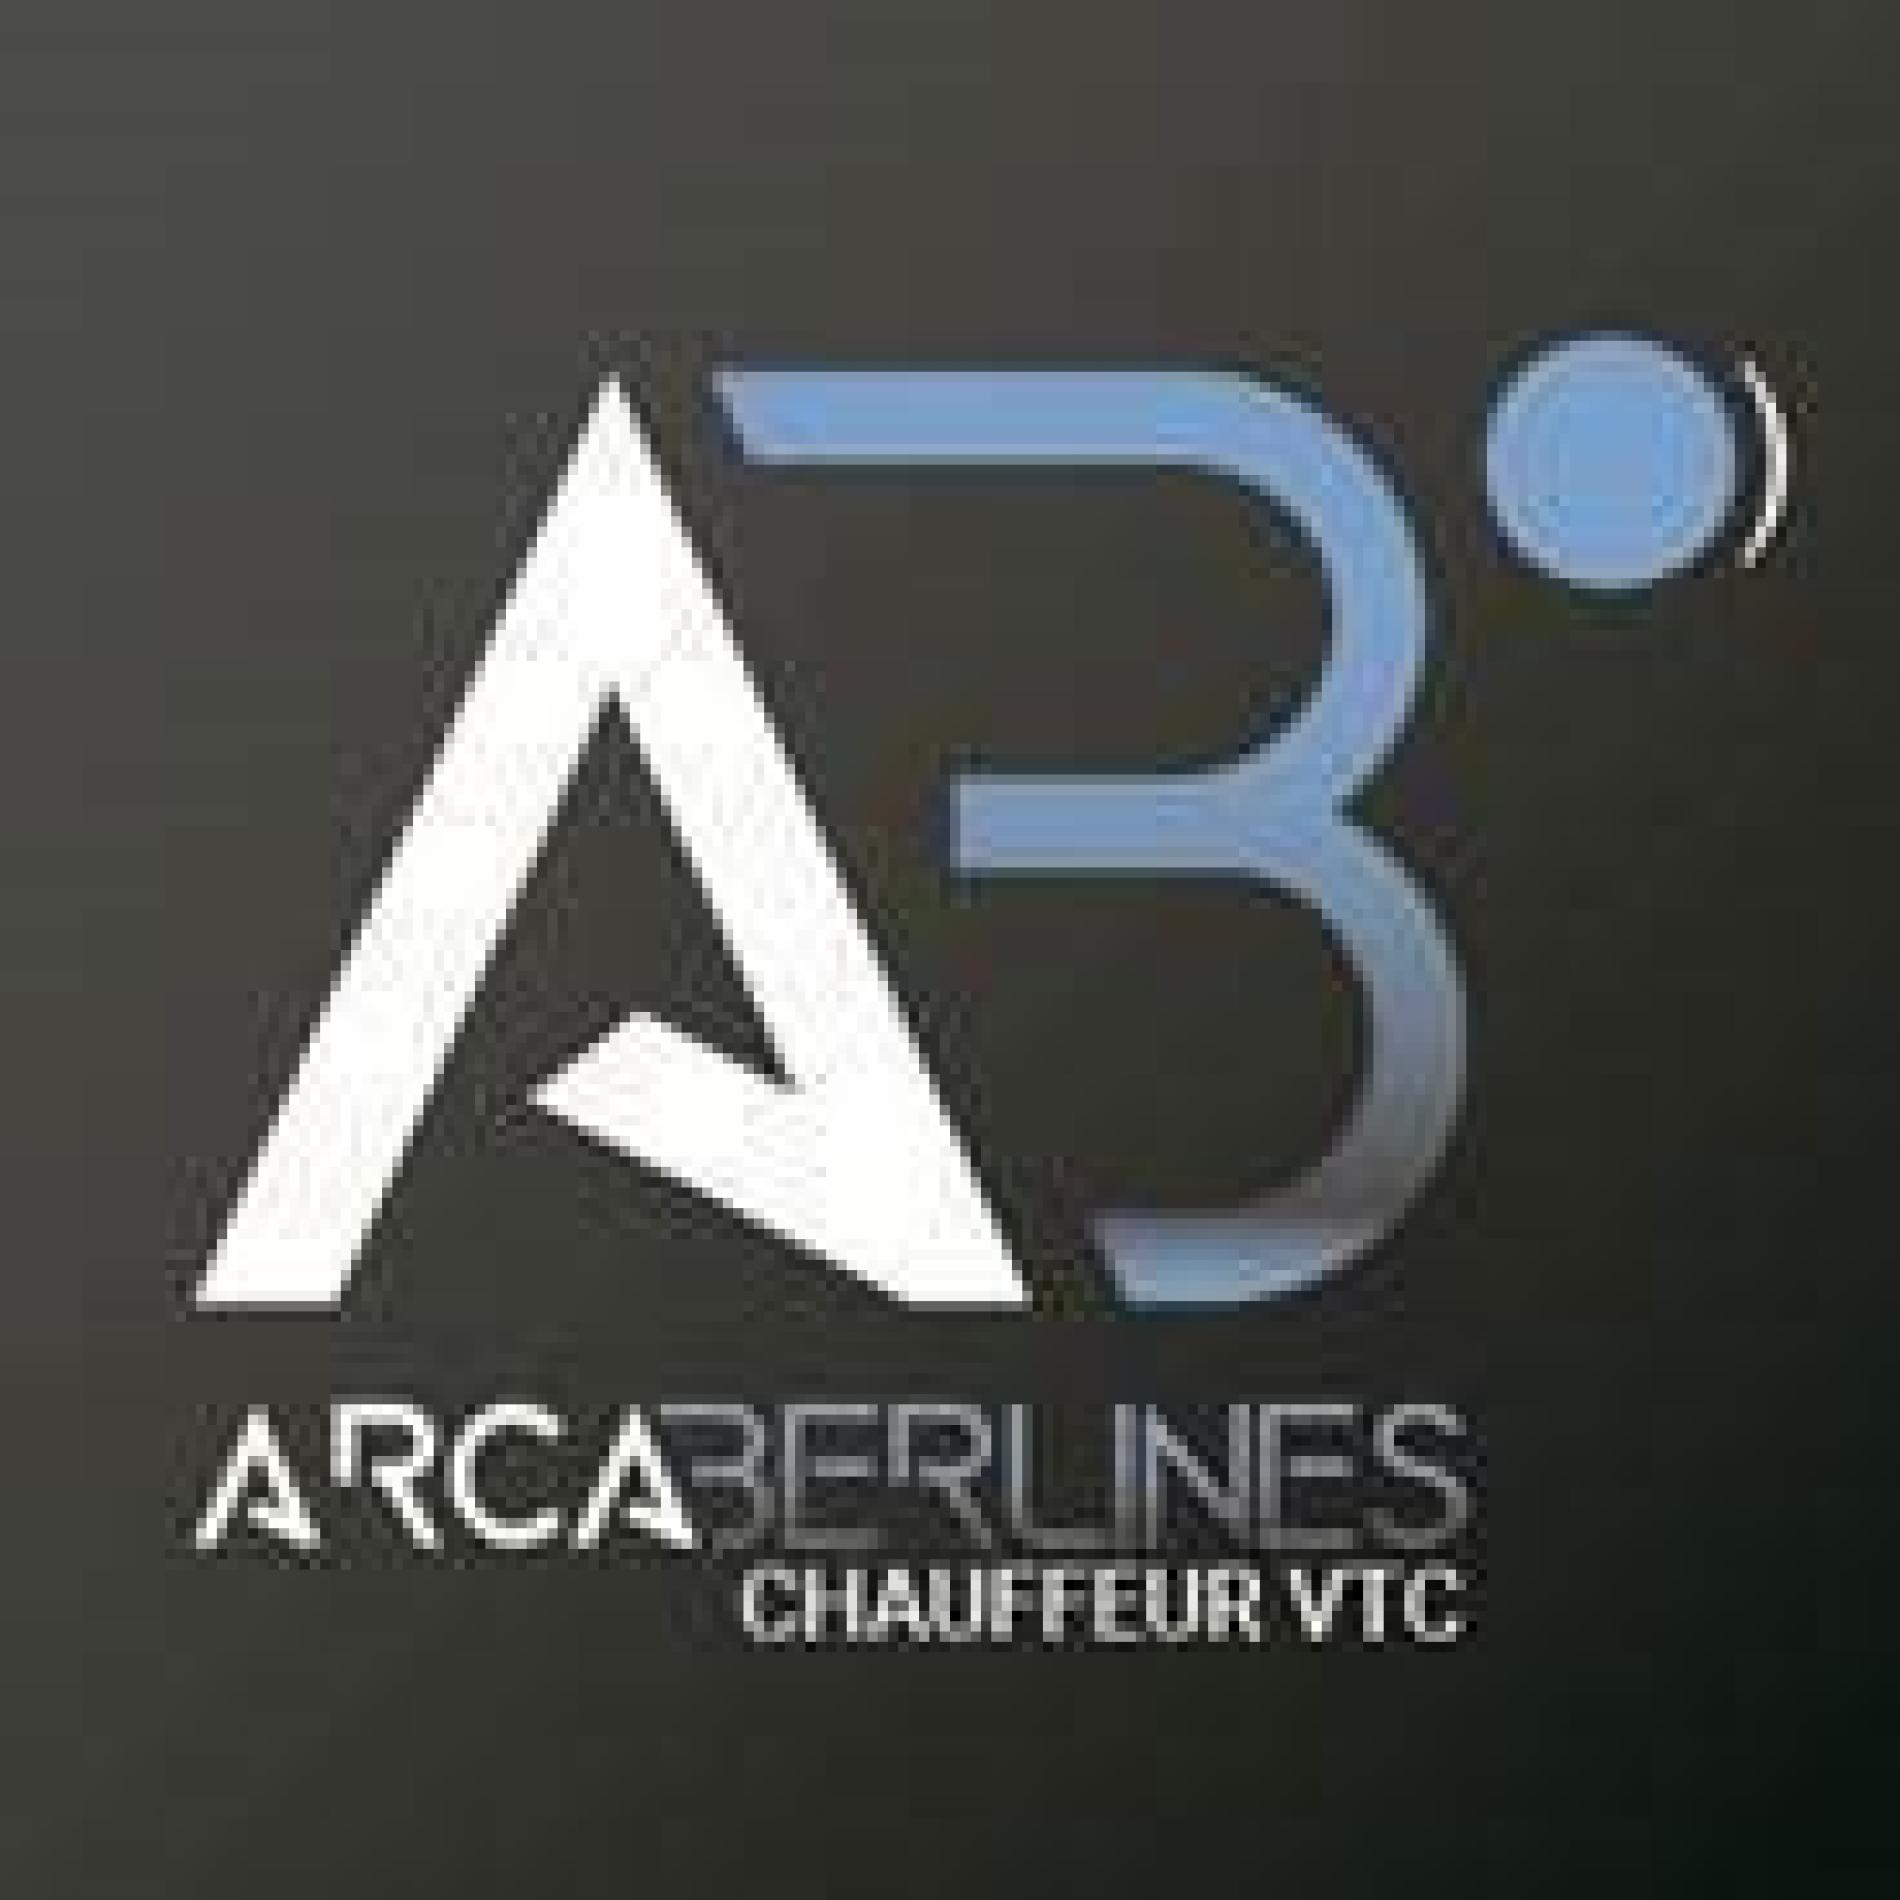 Chauffeur VTC ArcaBerlines